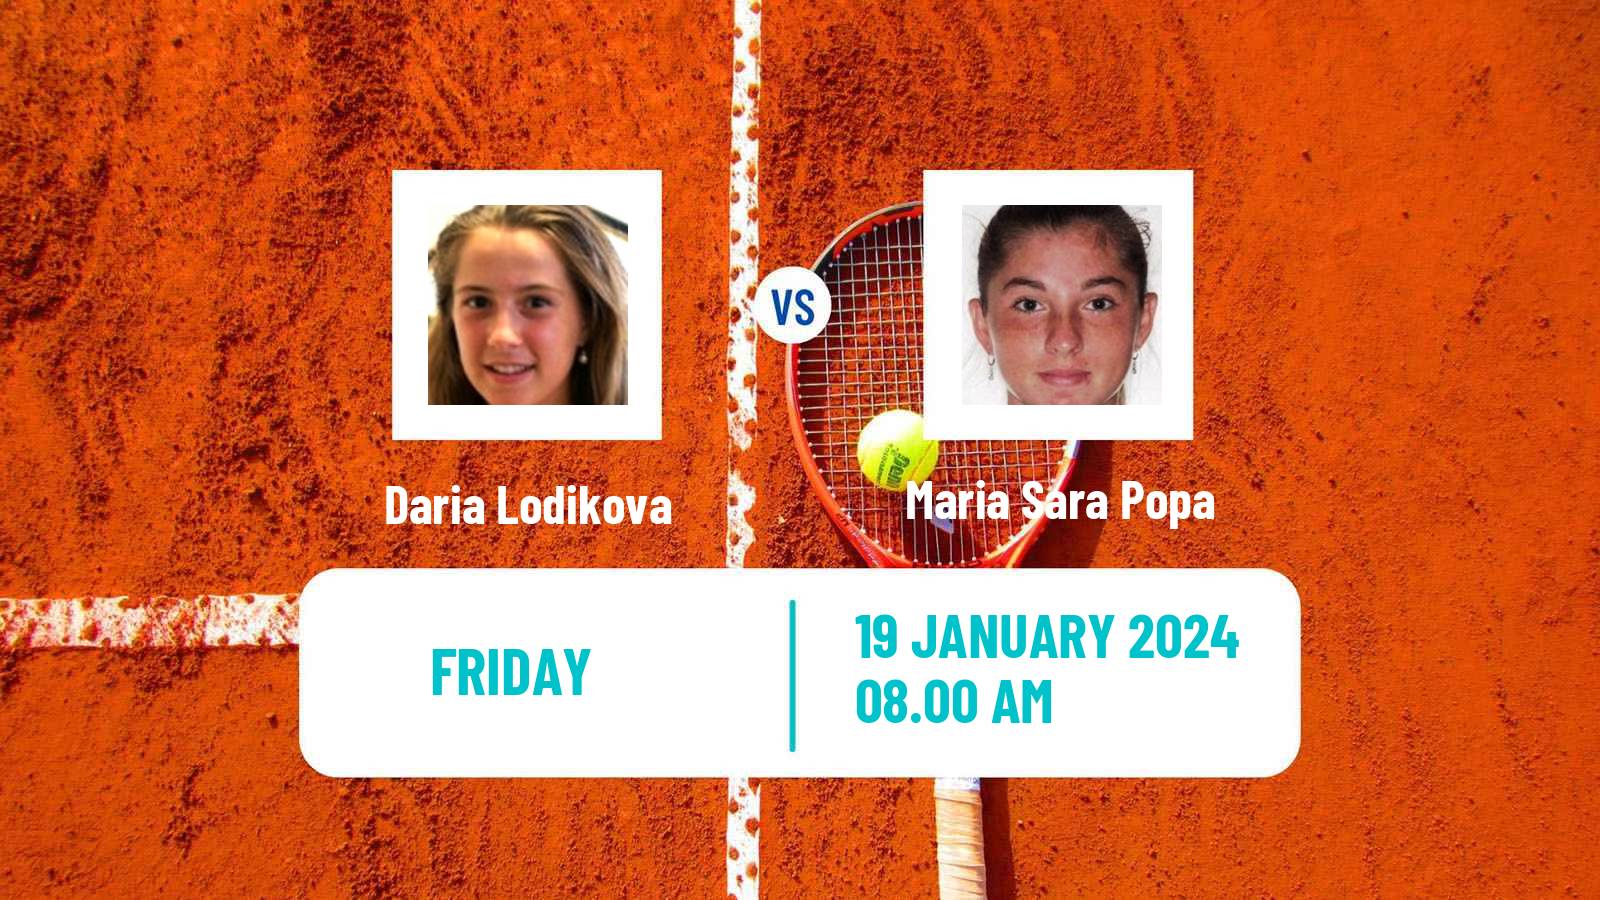 Tennis ITF W35 Buenos Aires Women Daria Lodikova - Maria Sara Popa